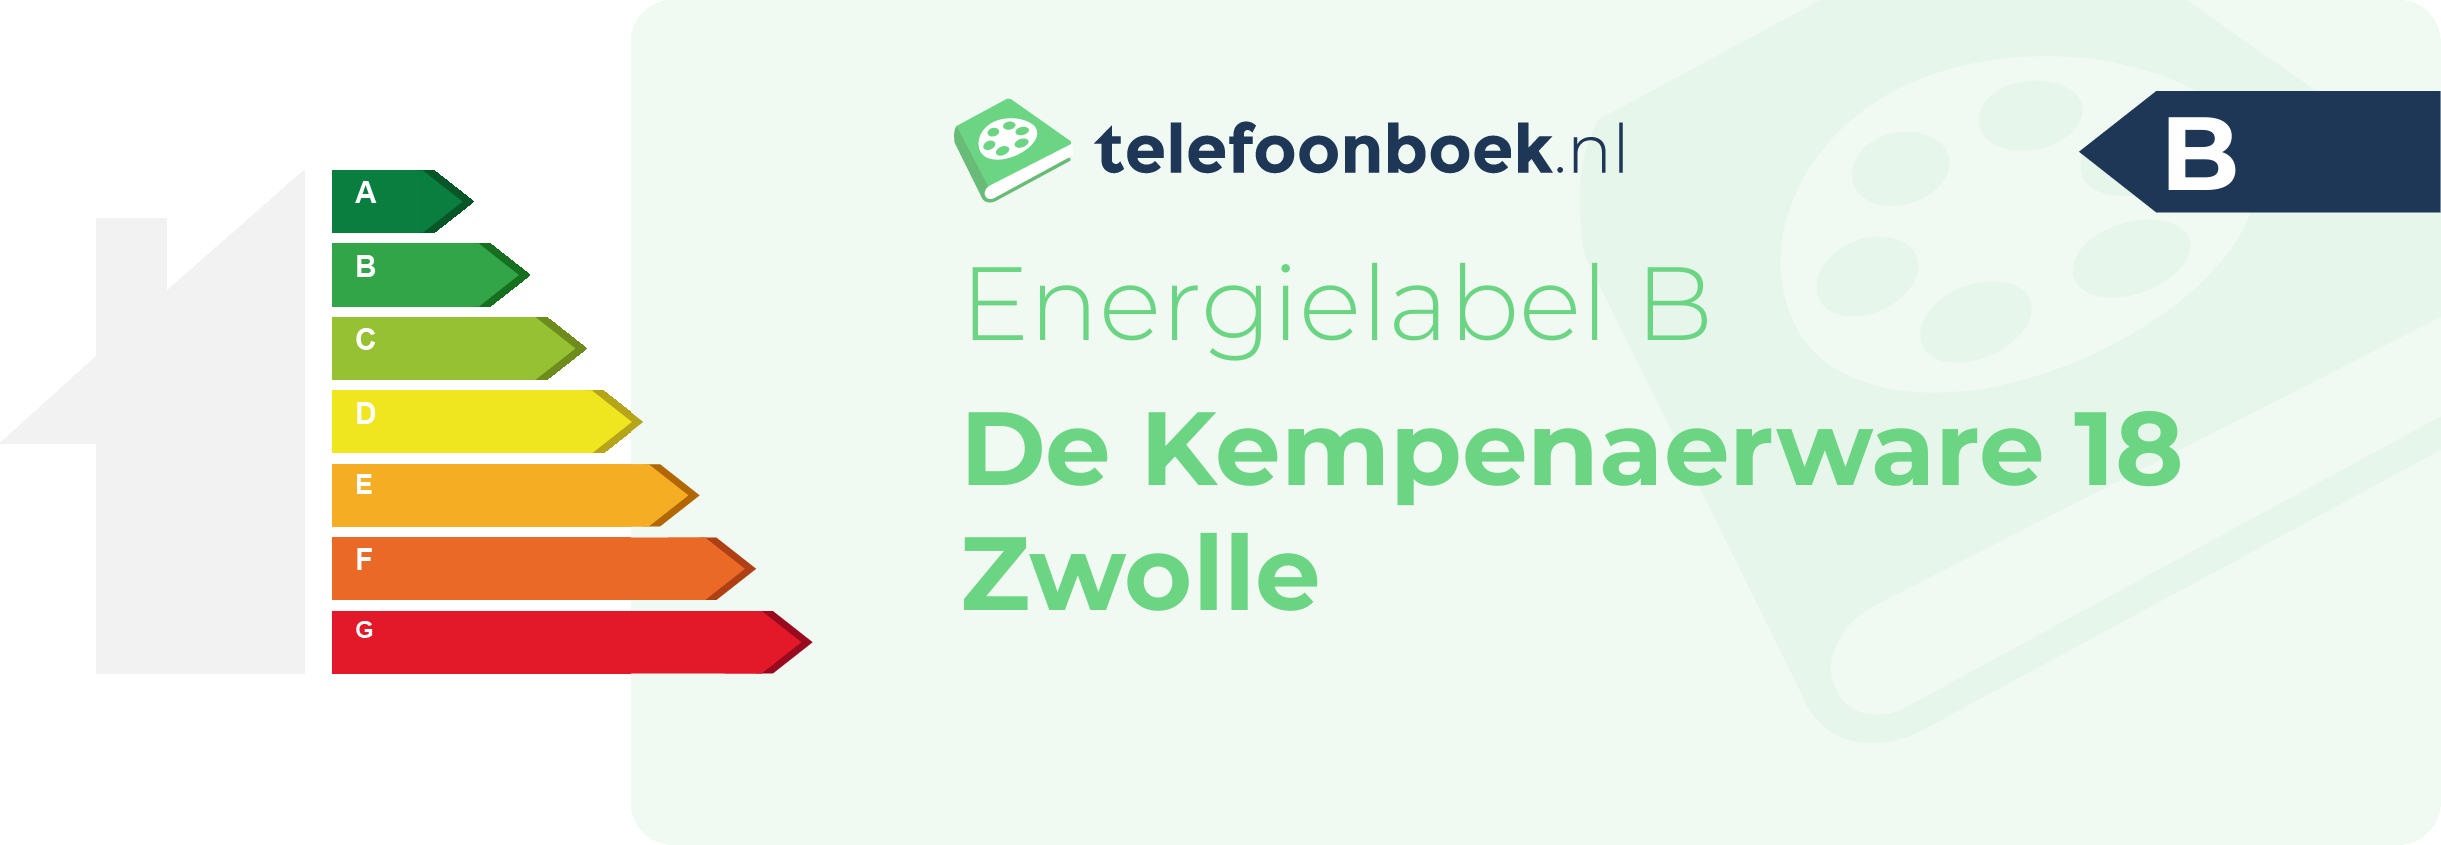 Energielabel De Kempenaerware 18 Zwolle